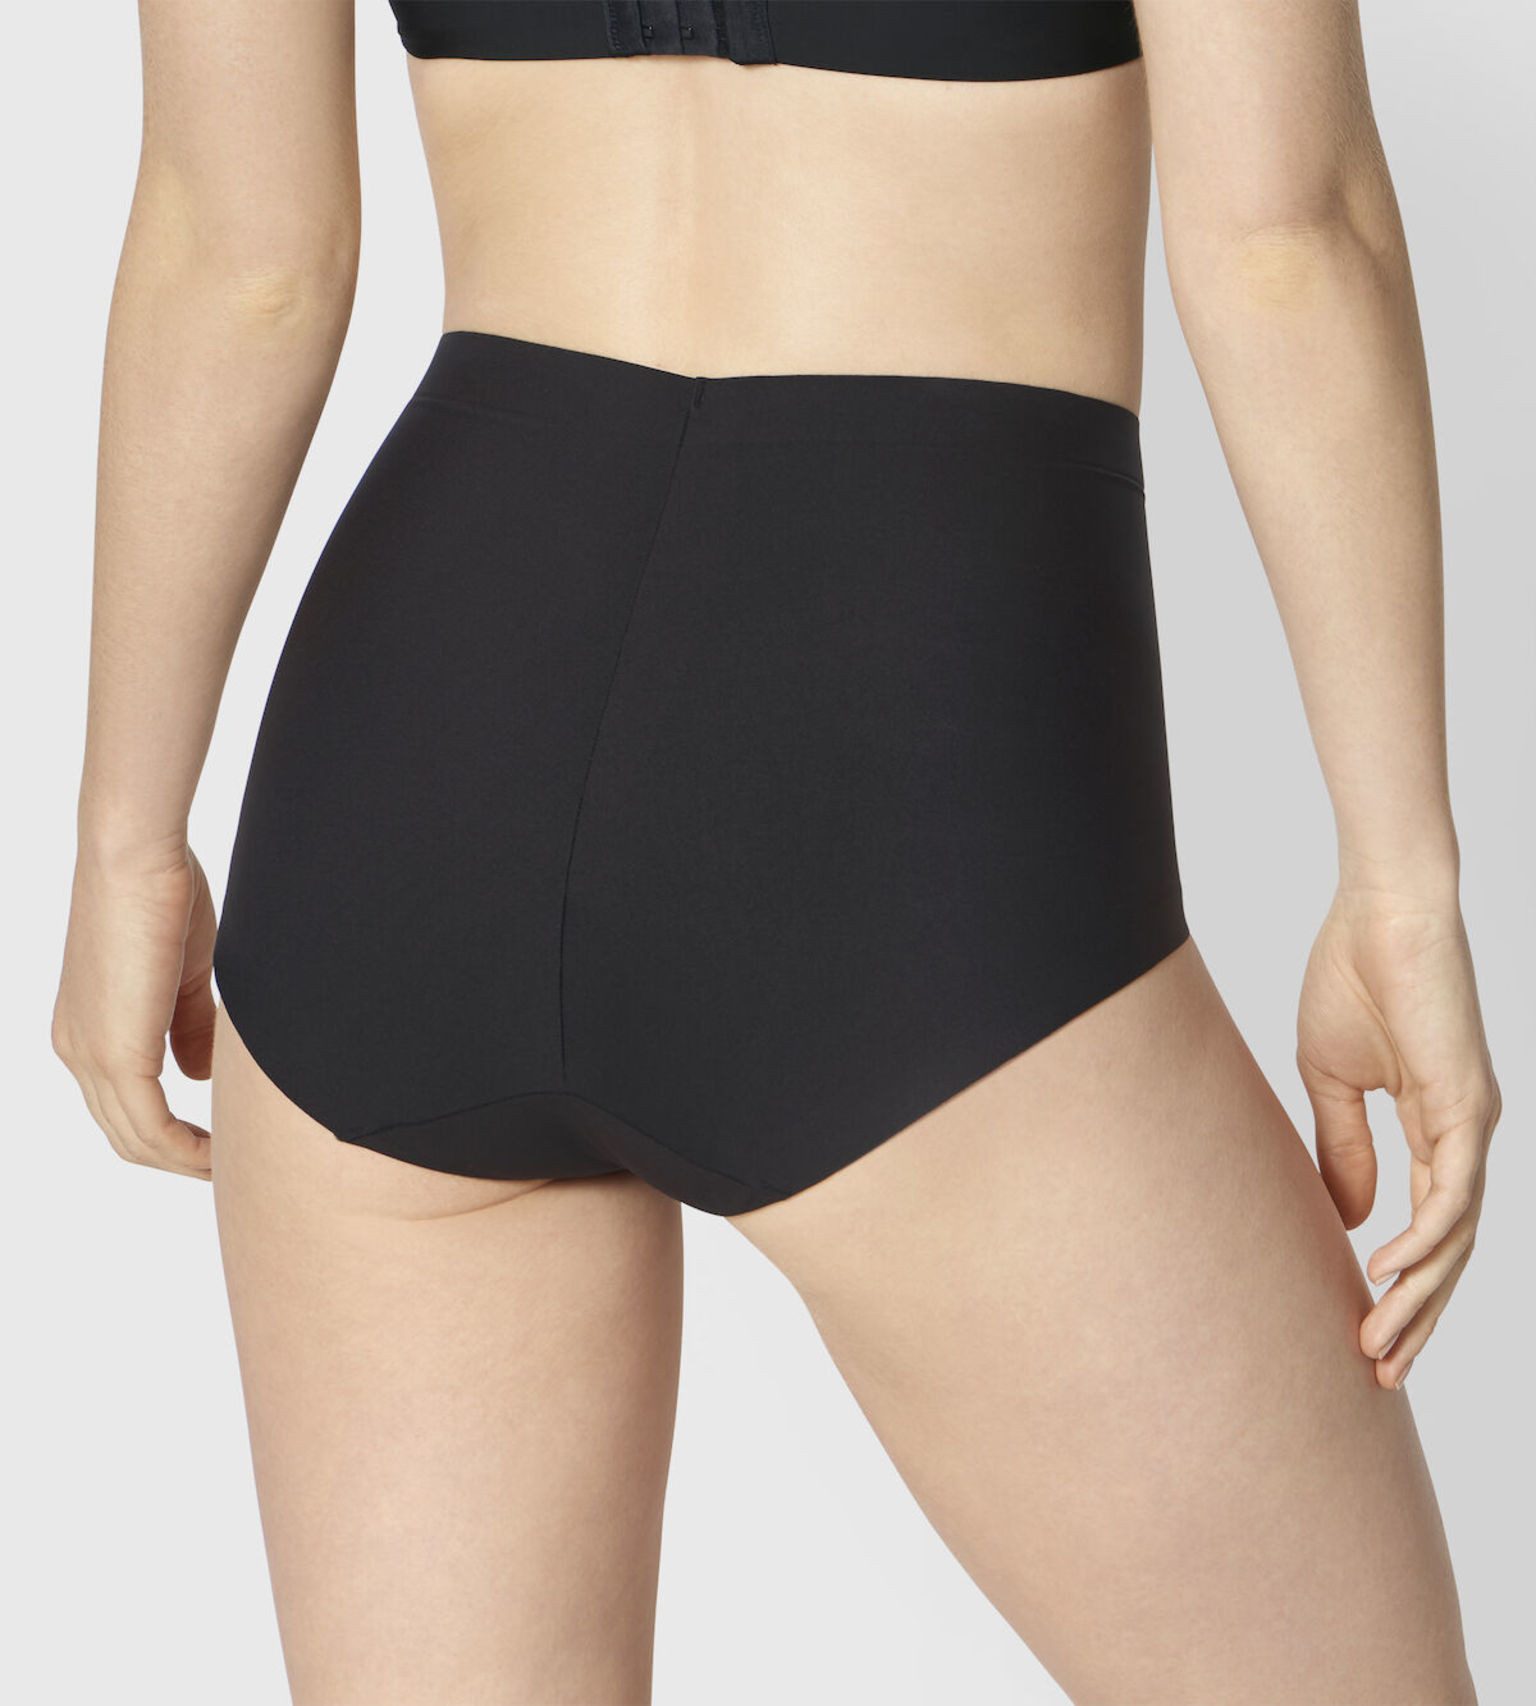 Kalhotky Medium Shaping Series Highwaist Panty černé - TRIUMPH BLACK XL